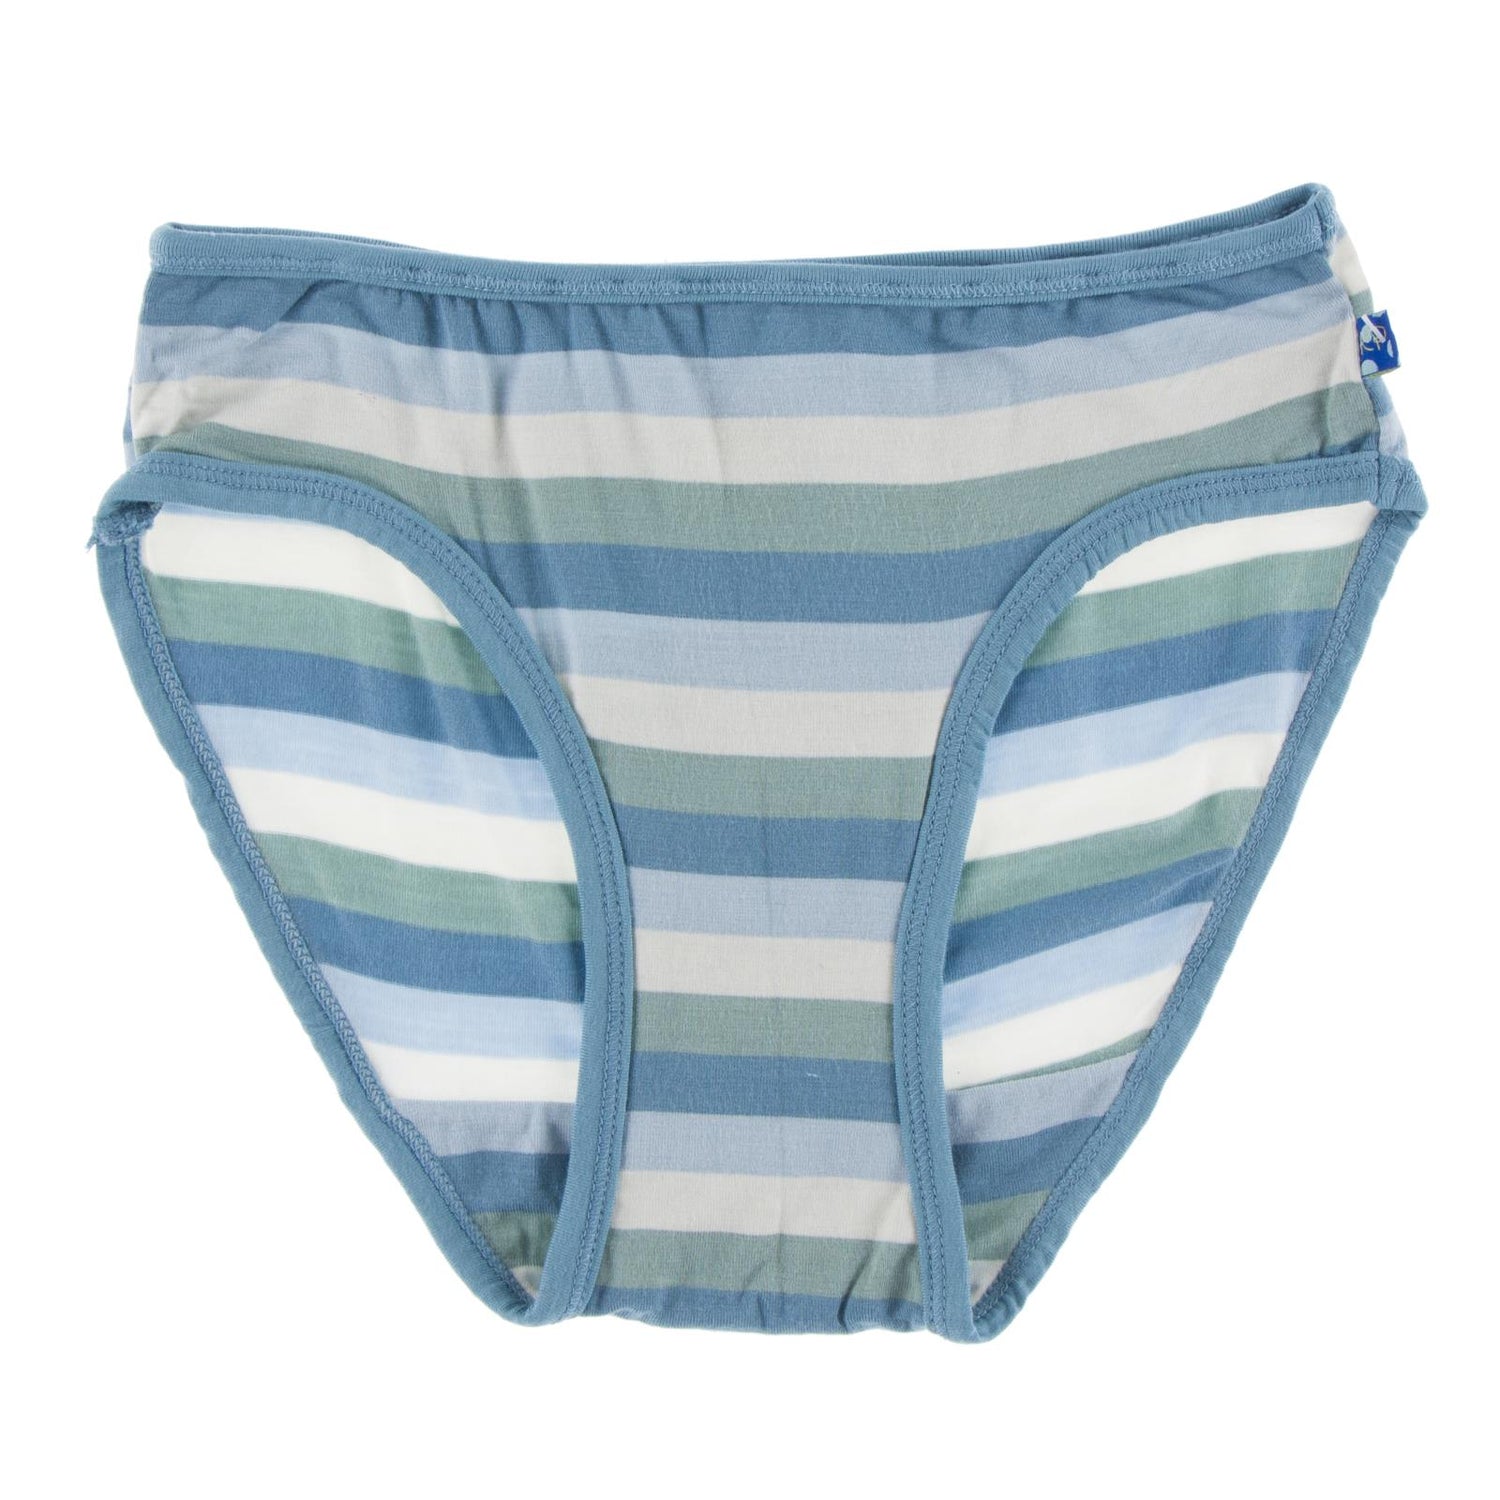 Print Underwear in Oceanography Stripe with Blue Moon Trim